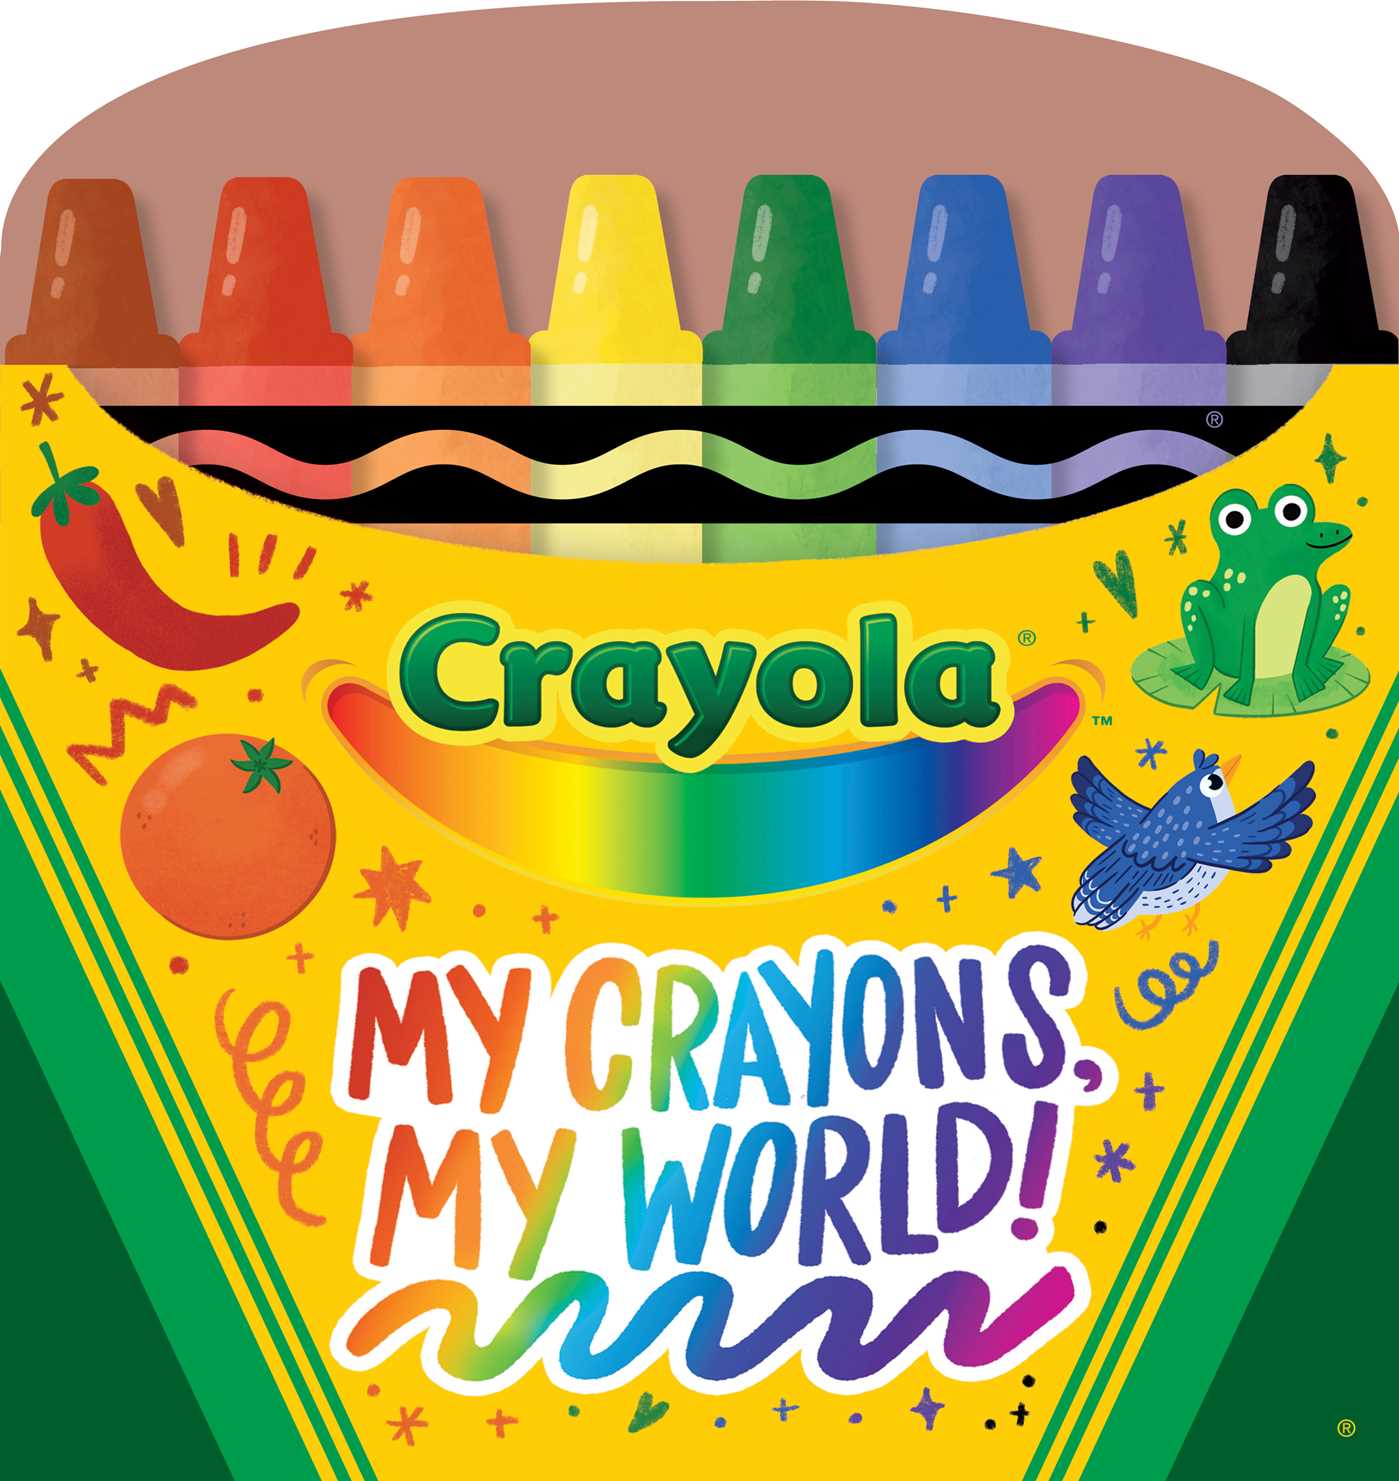 Crayola: My Crayons, My World! (A Crayola Crayon Shaped Novelty Board Book for Toddlers)